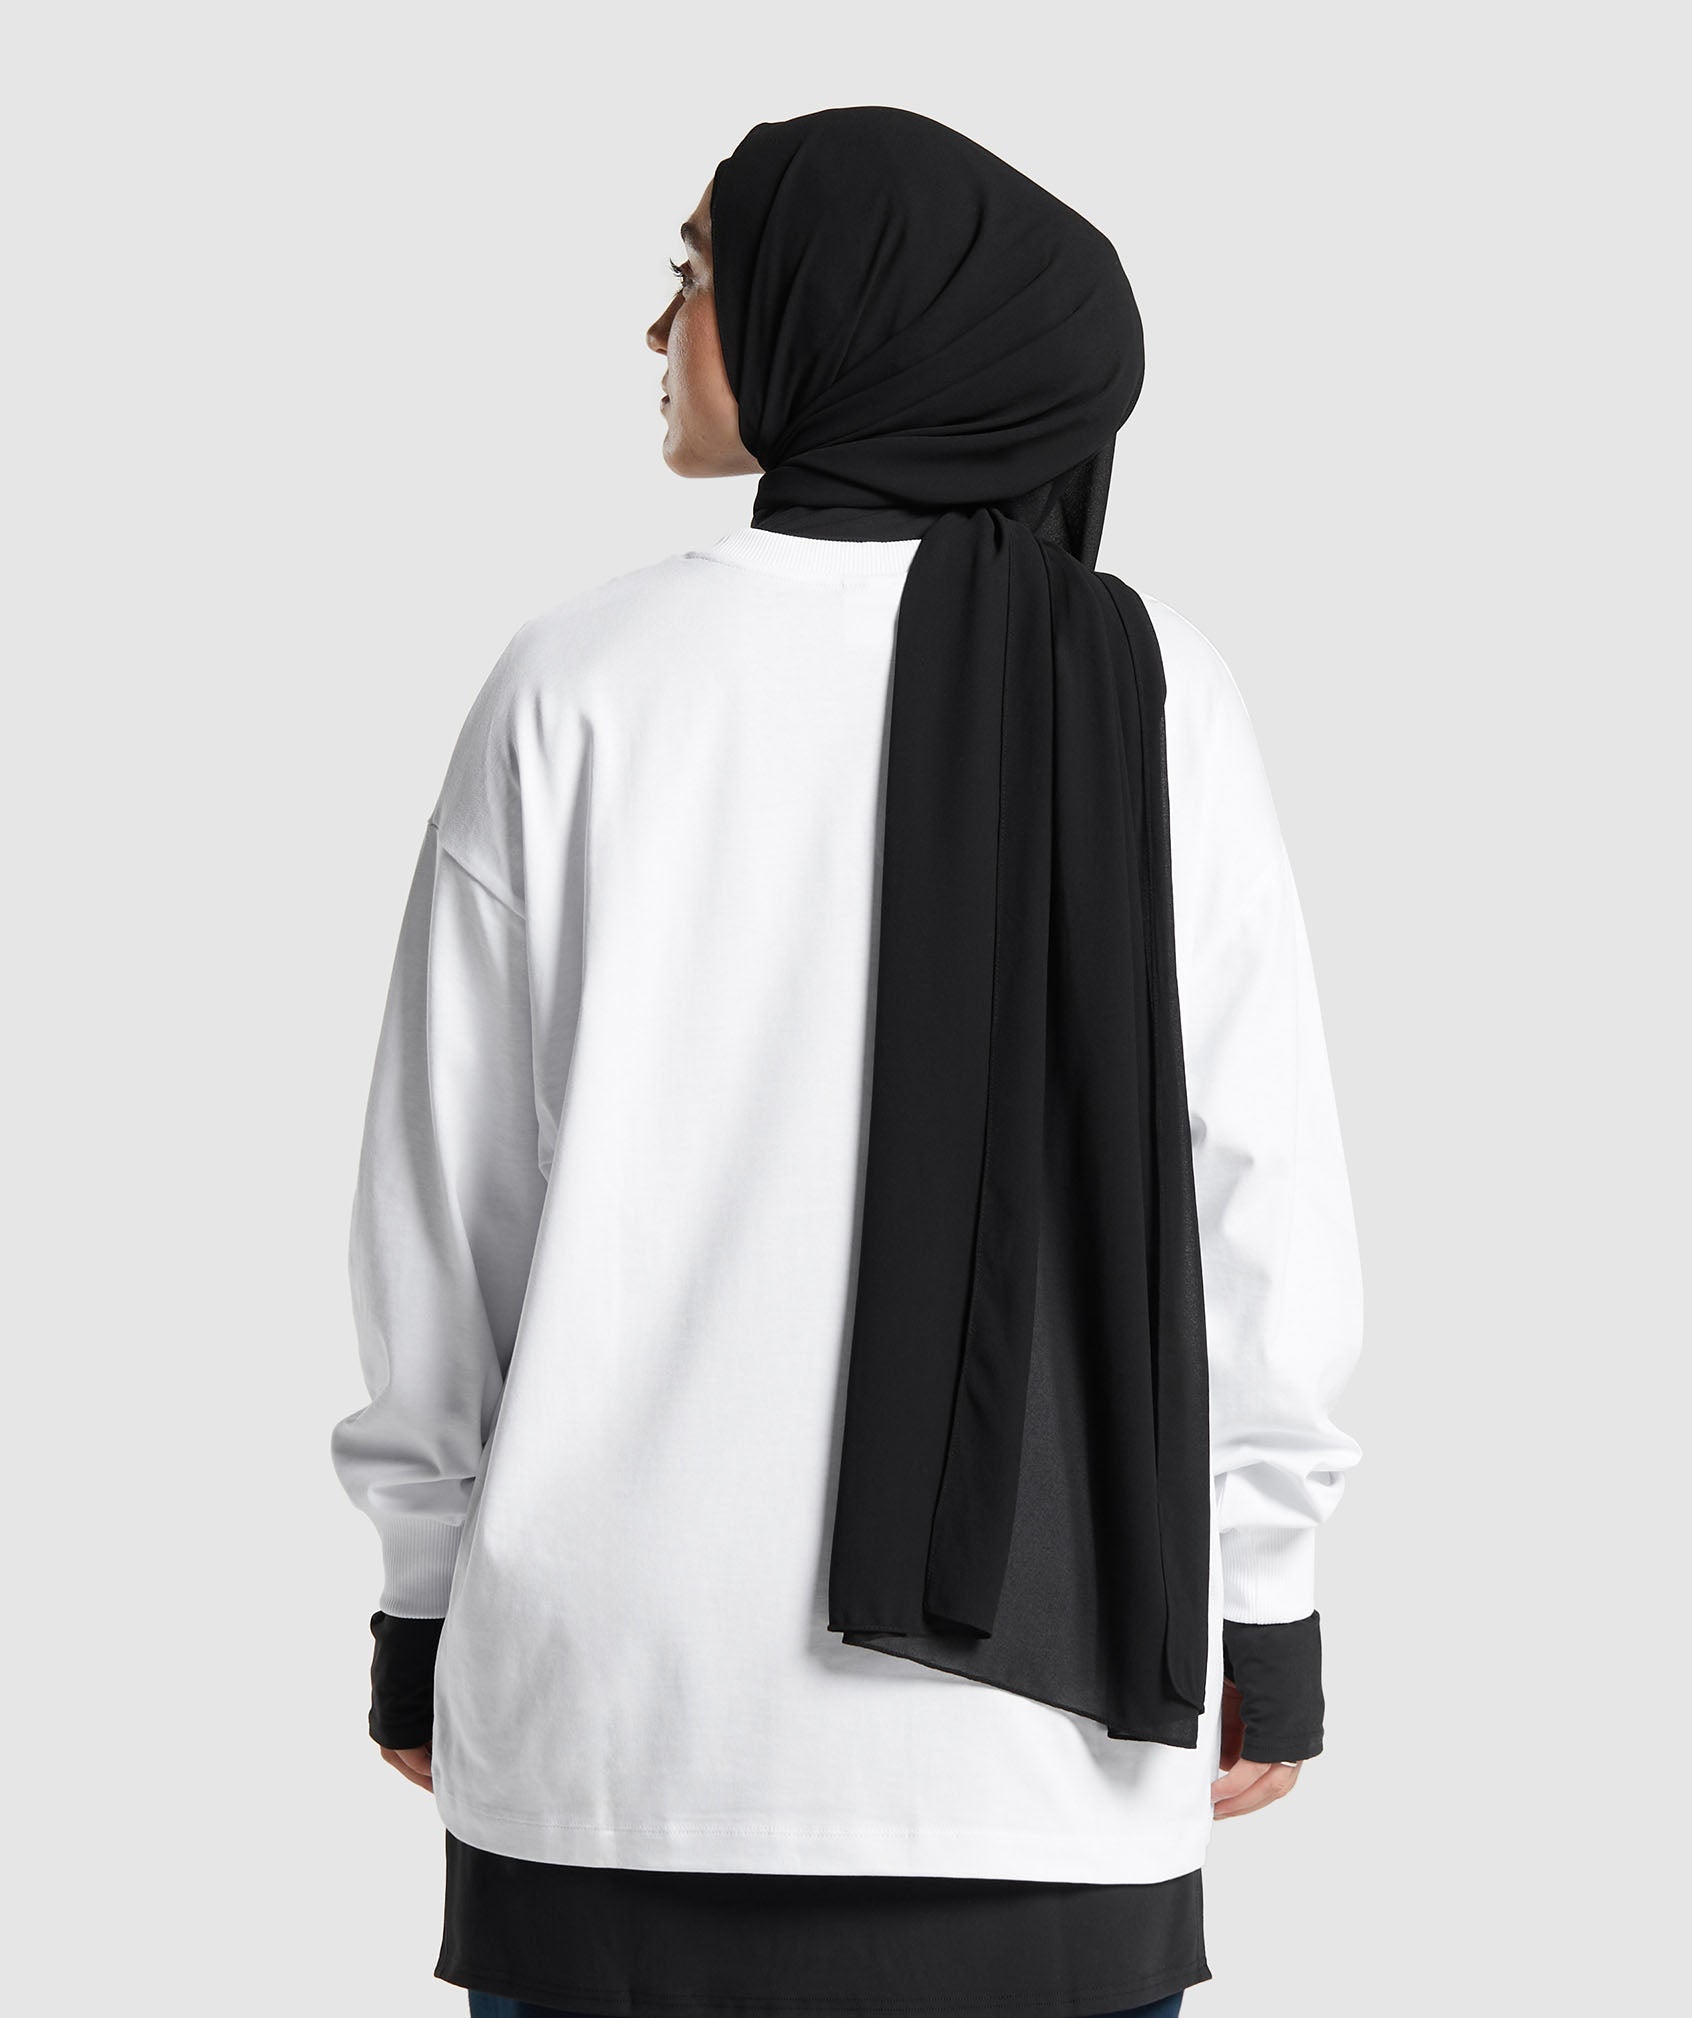 GS X Leana Deeb Oversized Long Sleeve Top